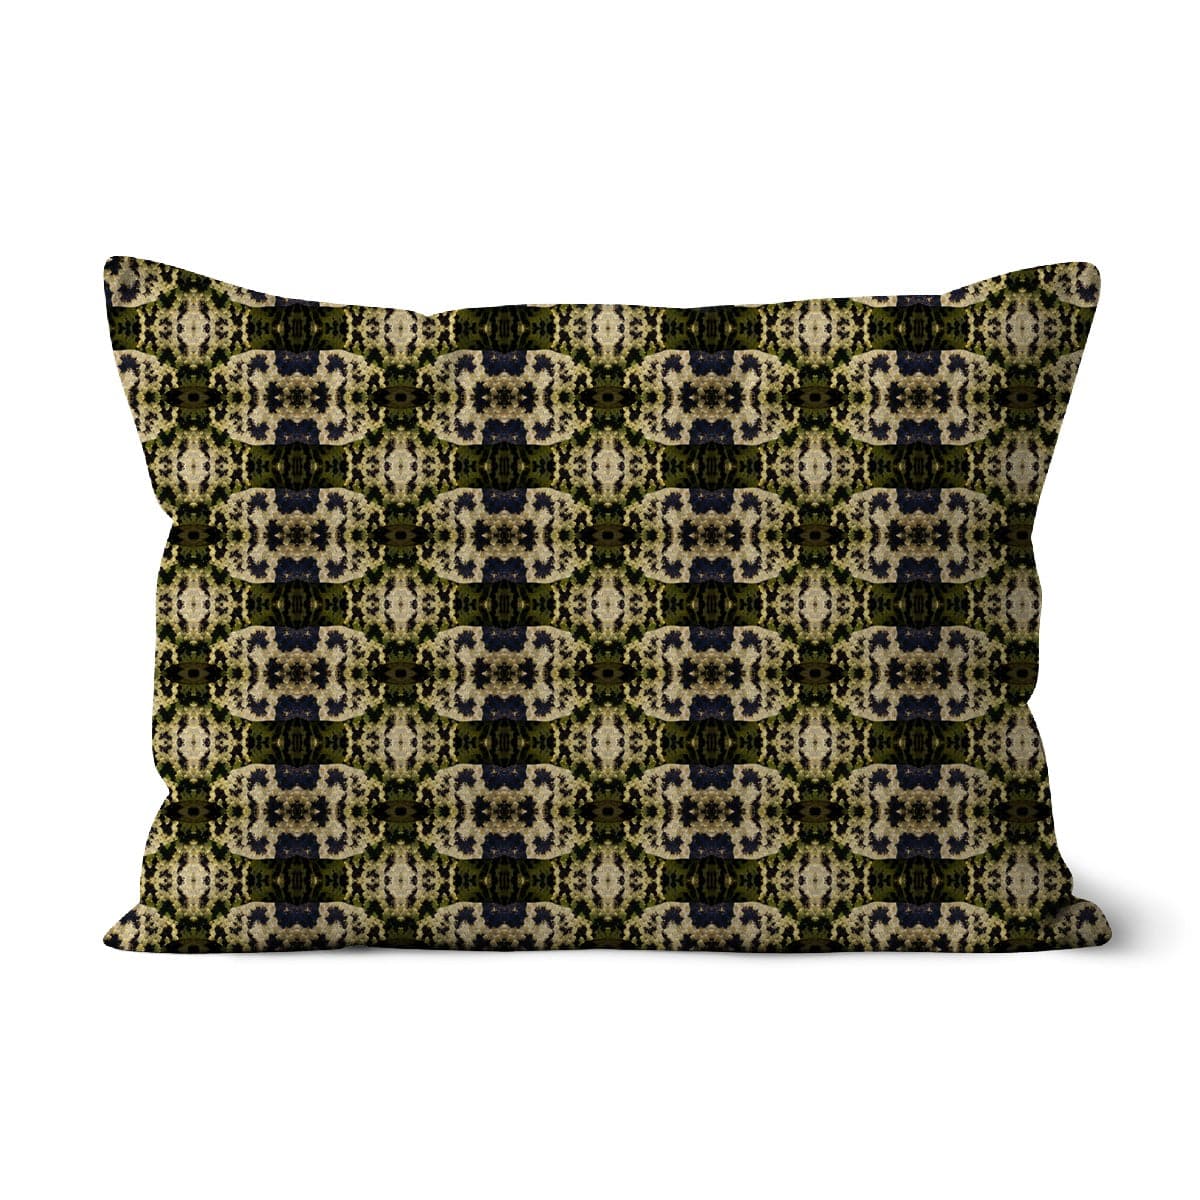 Reptile skin pattern  Meditation Pillow/Cushion, by Sensus Studio Design